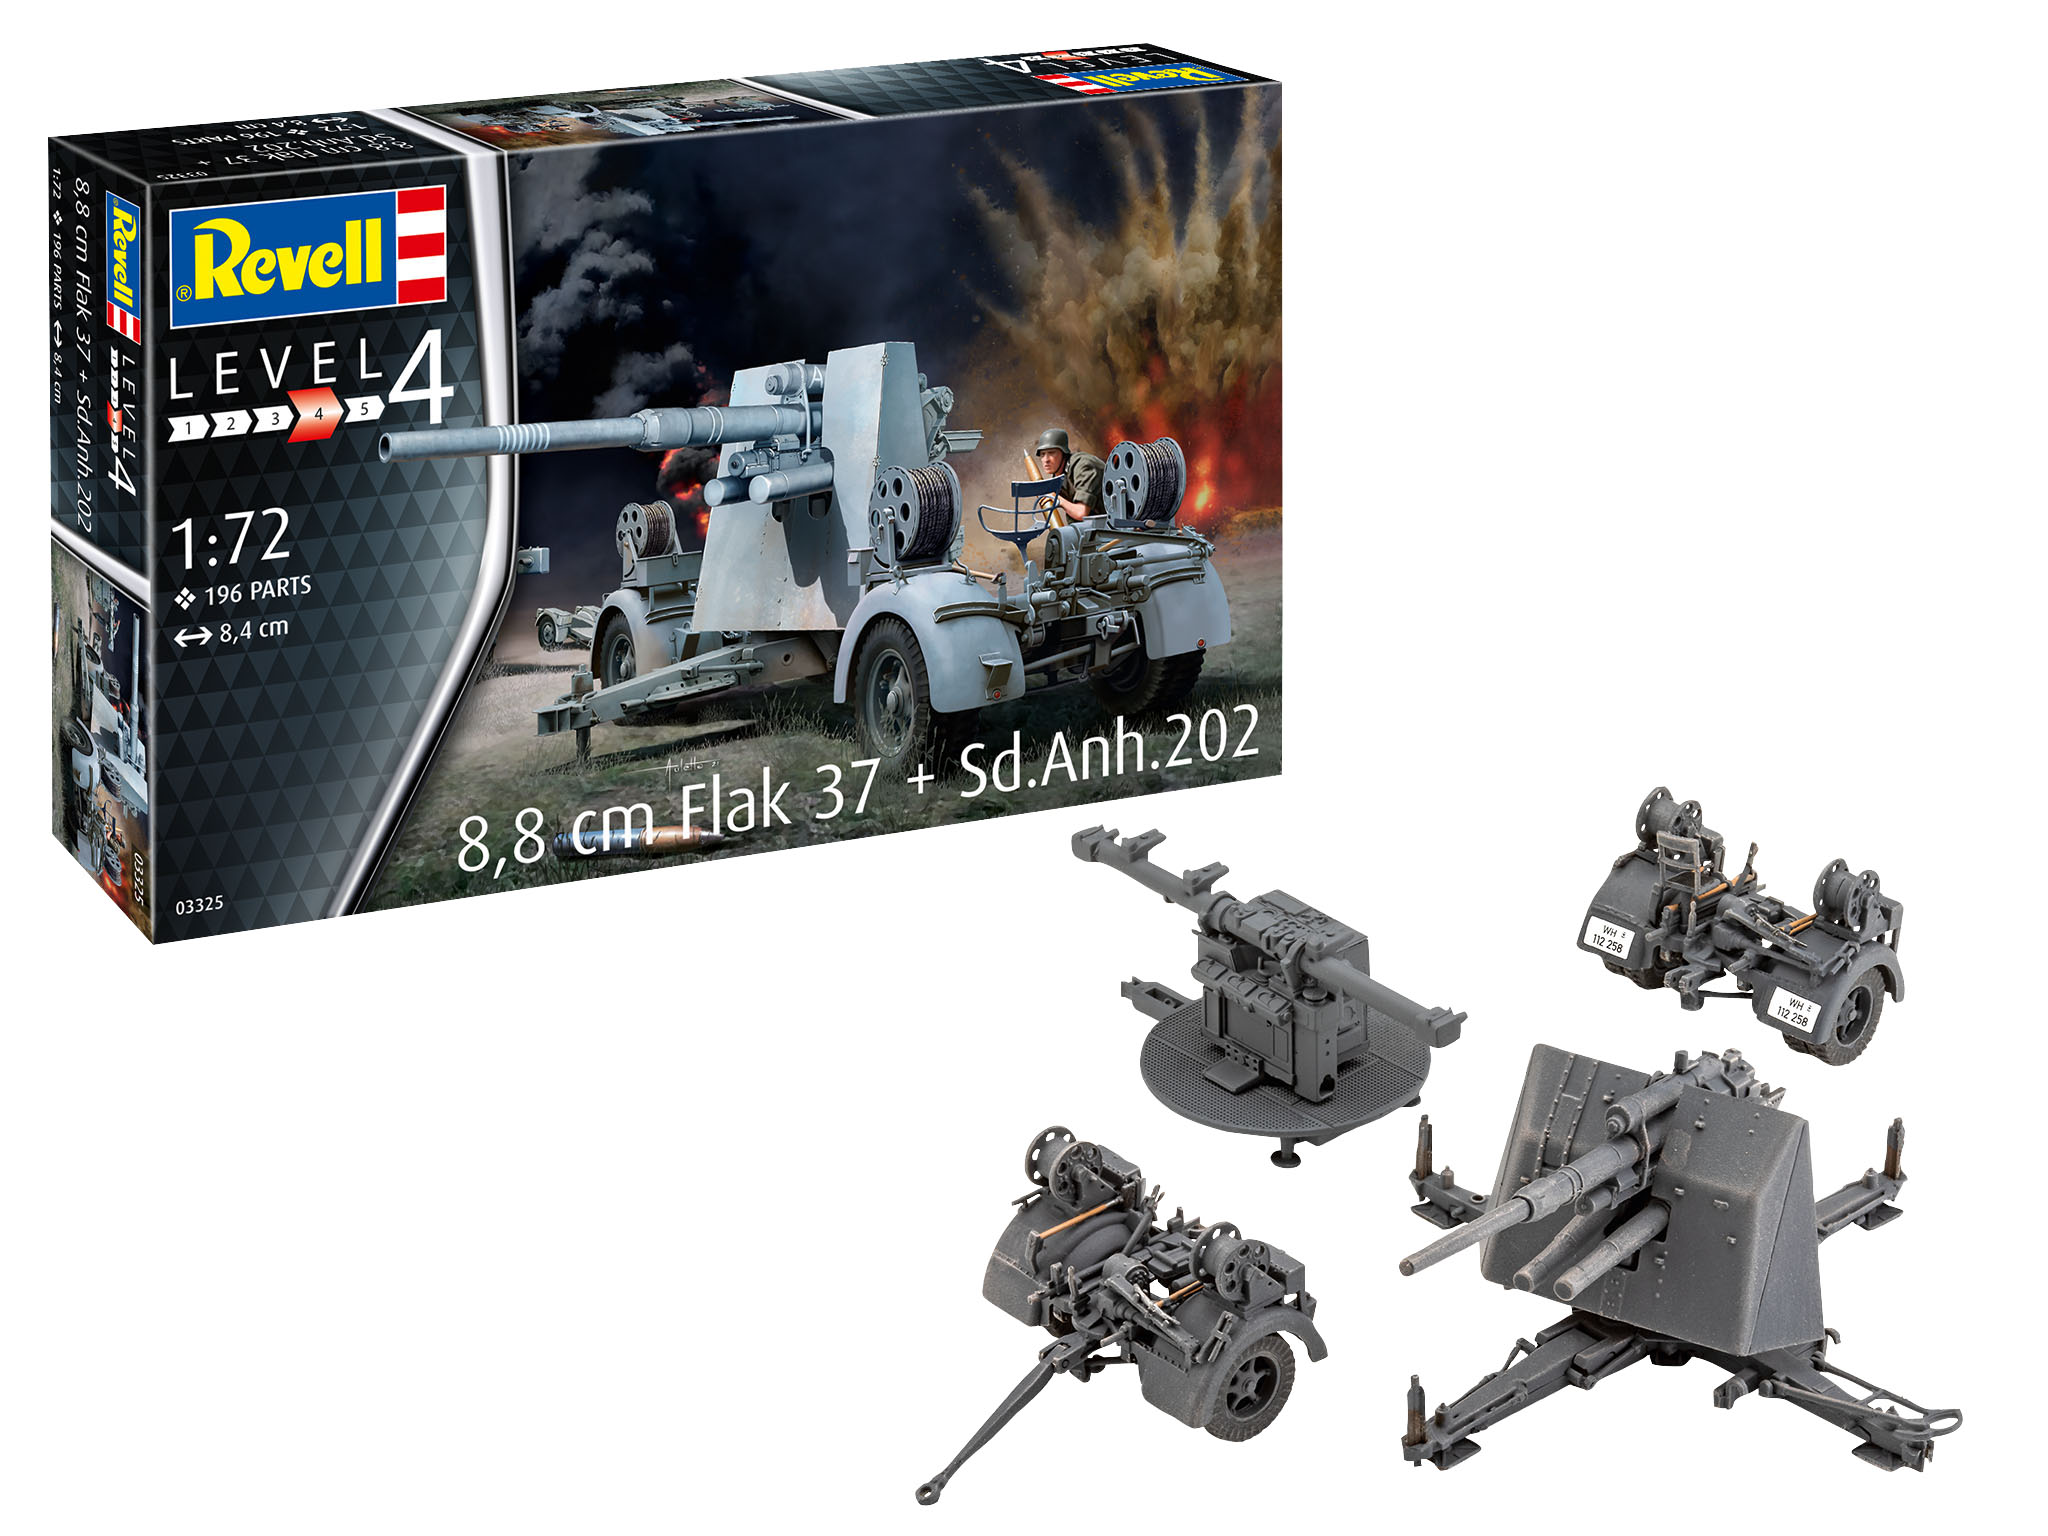 Revell 8,8 cm Flak 37 + Sd.Anh.202 in 1:72 bouwpakket